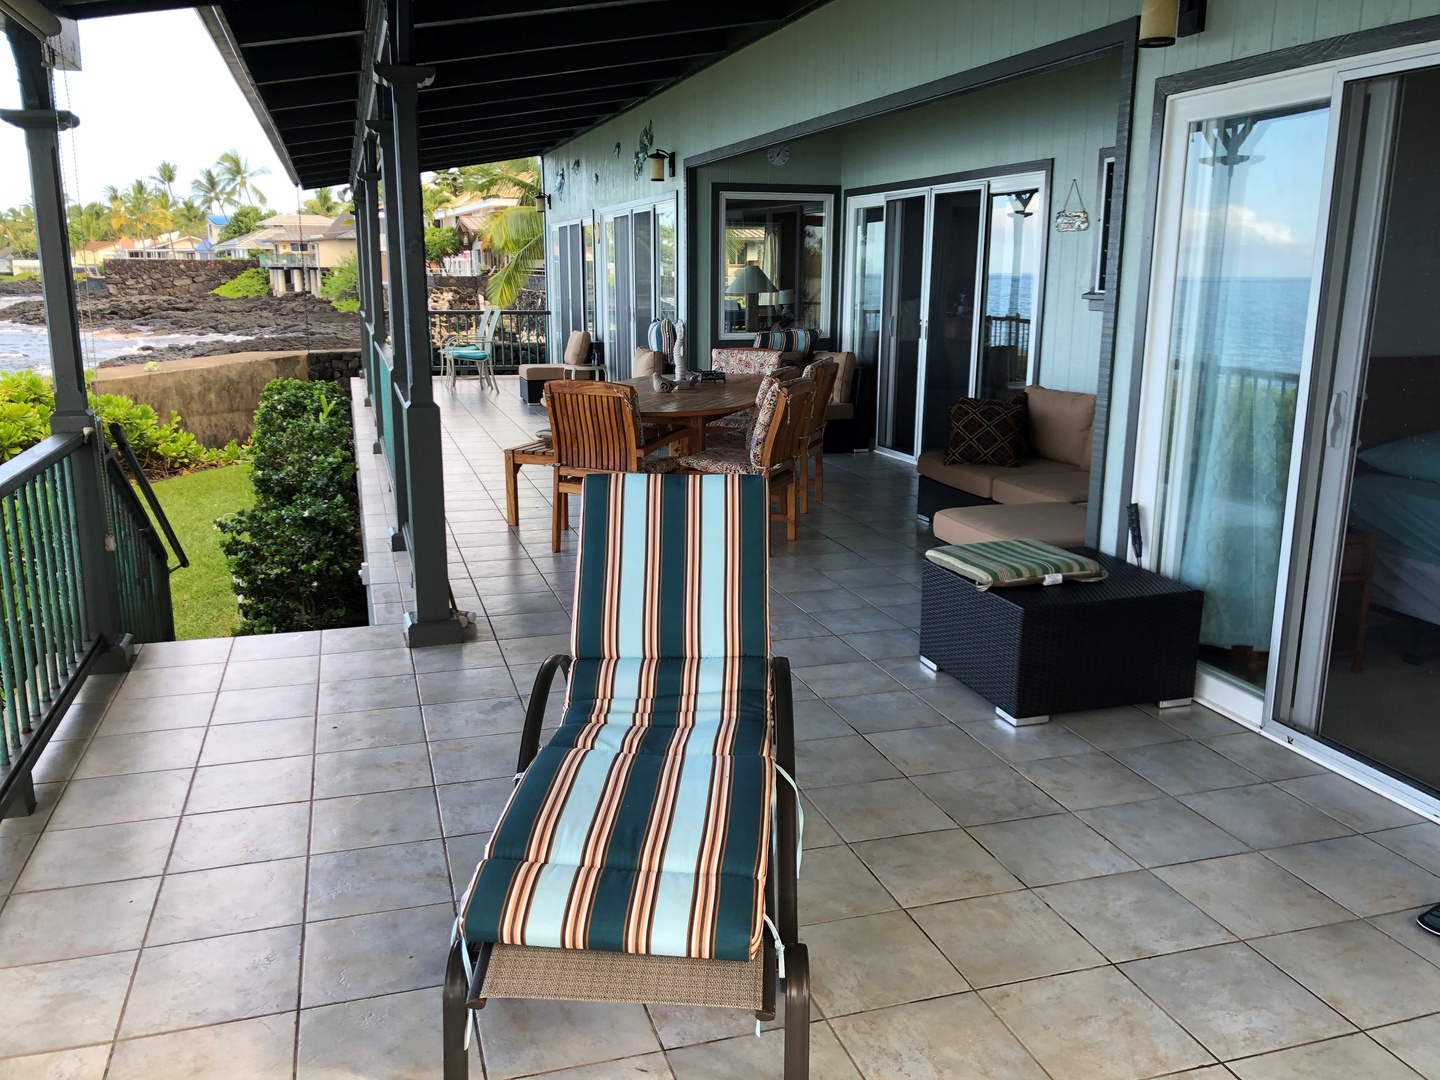 Kailua Kona Vacation Rentals, Hoku'Ea Hale - Many comfortable shaded seats on Oceanfront lanai